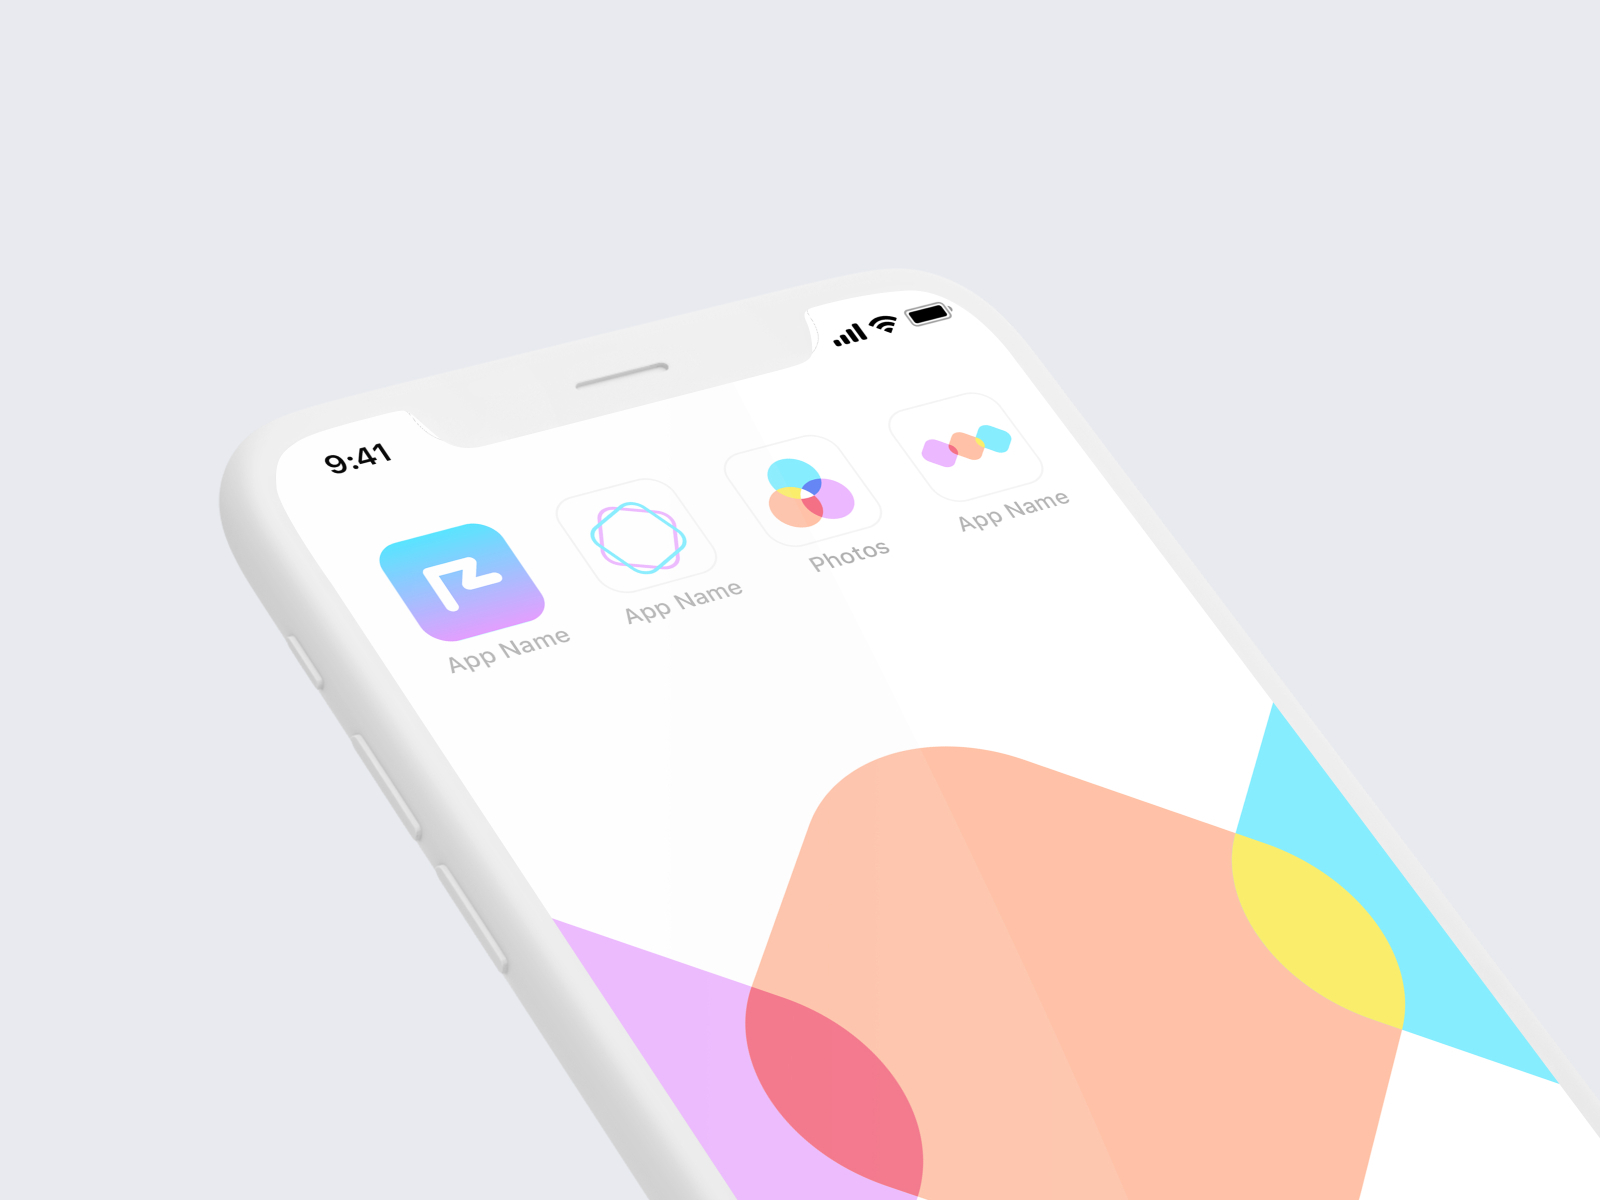 App icon by Tseng TeYu on Dribbble